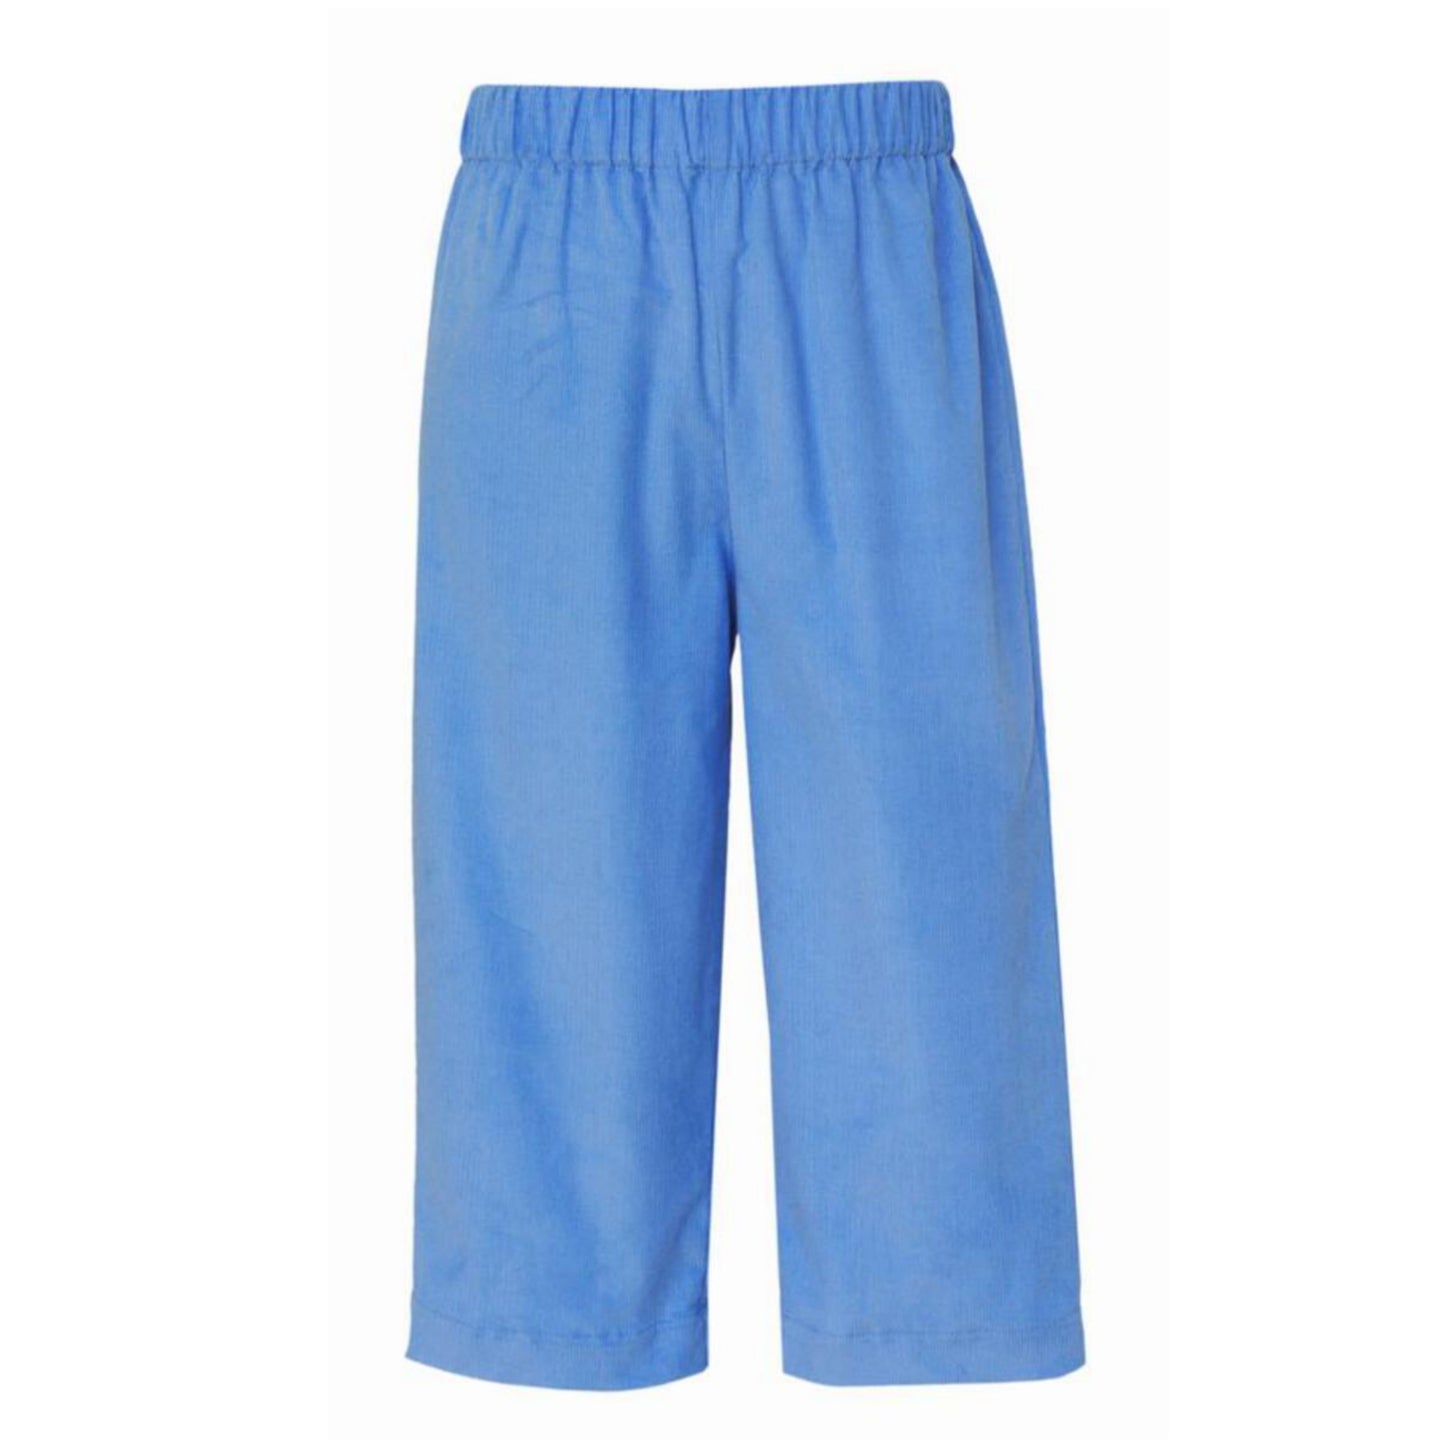 Boy's Periwinkle Blue Corduroy Pants